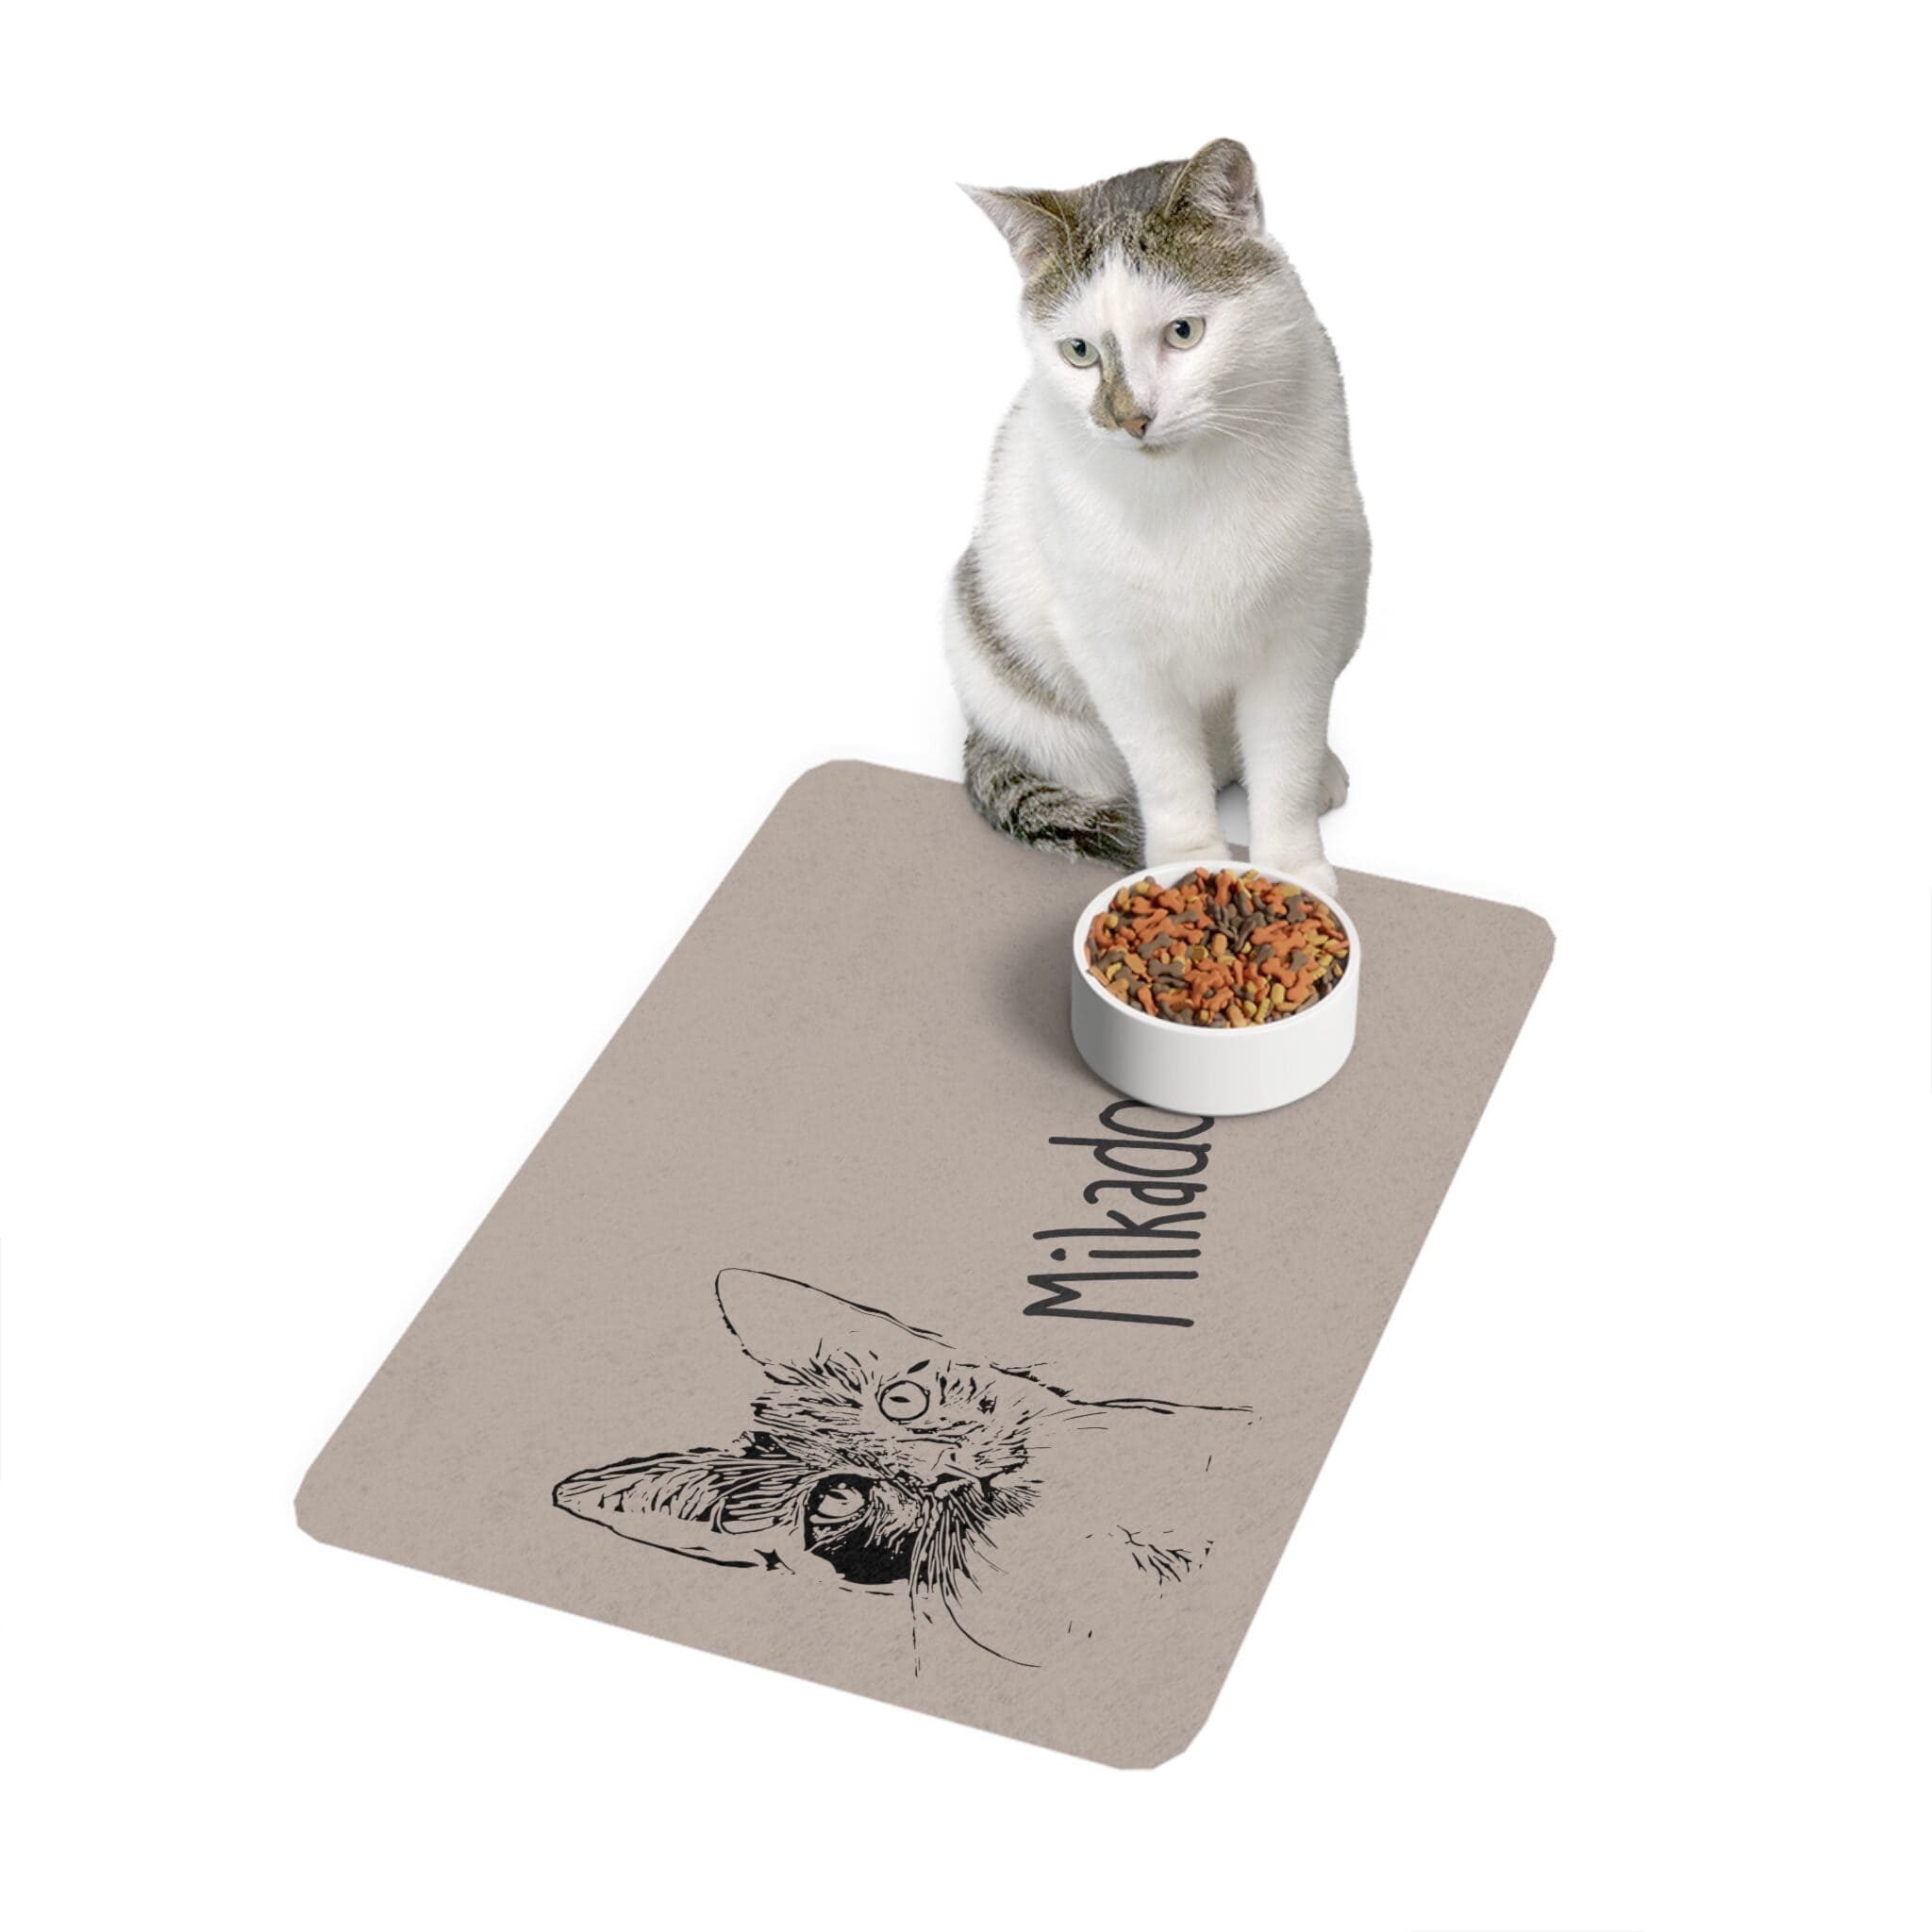 https://mypawradise.com/wp-content/uploads/2022/12/custom-pet-portrait-vector-cat-food-mat-context-02.jpeg